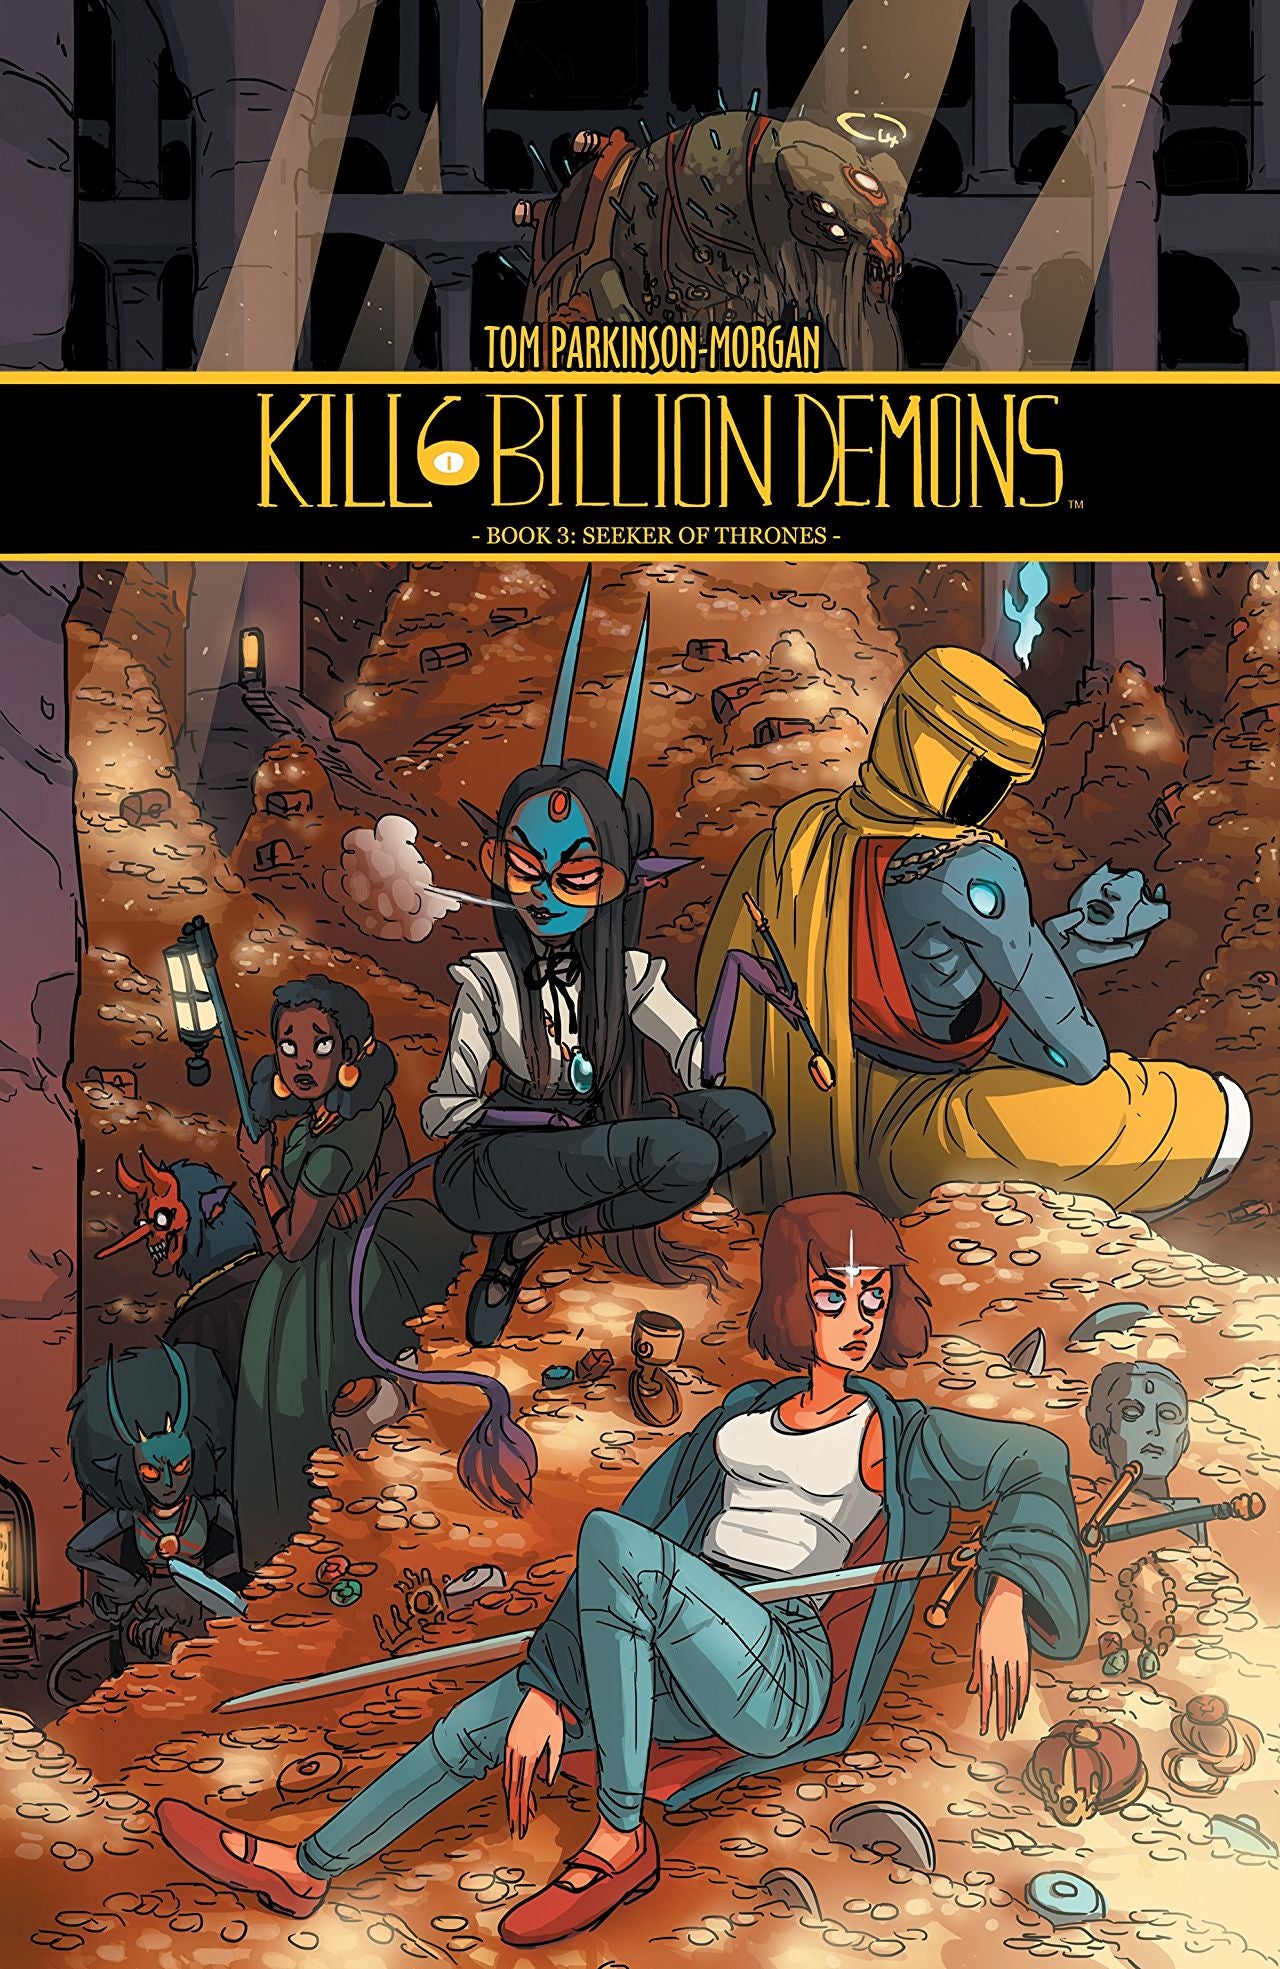 Thrones　Comics　–　3:　Seeker　of　Book　Kill　Demons　Billion　Etc.